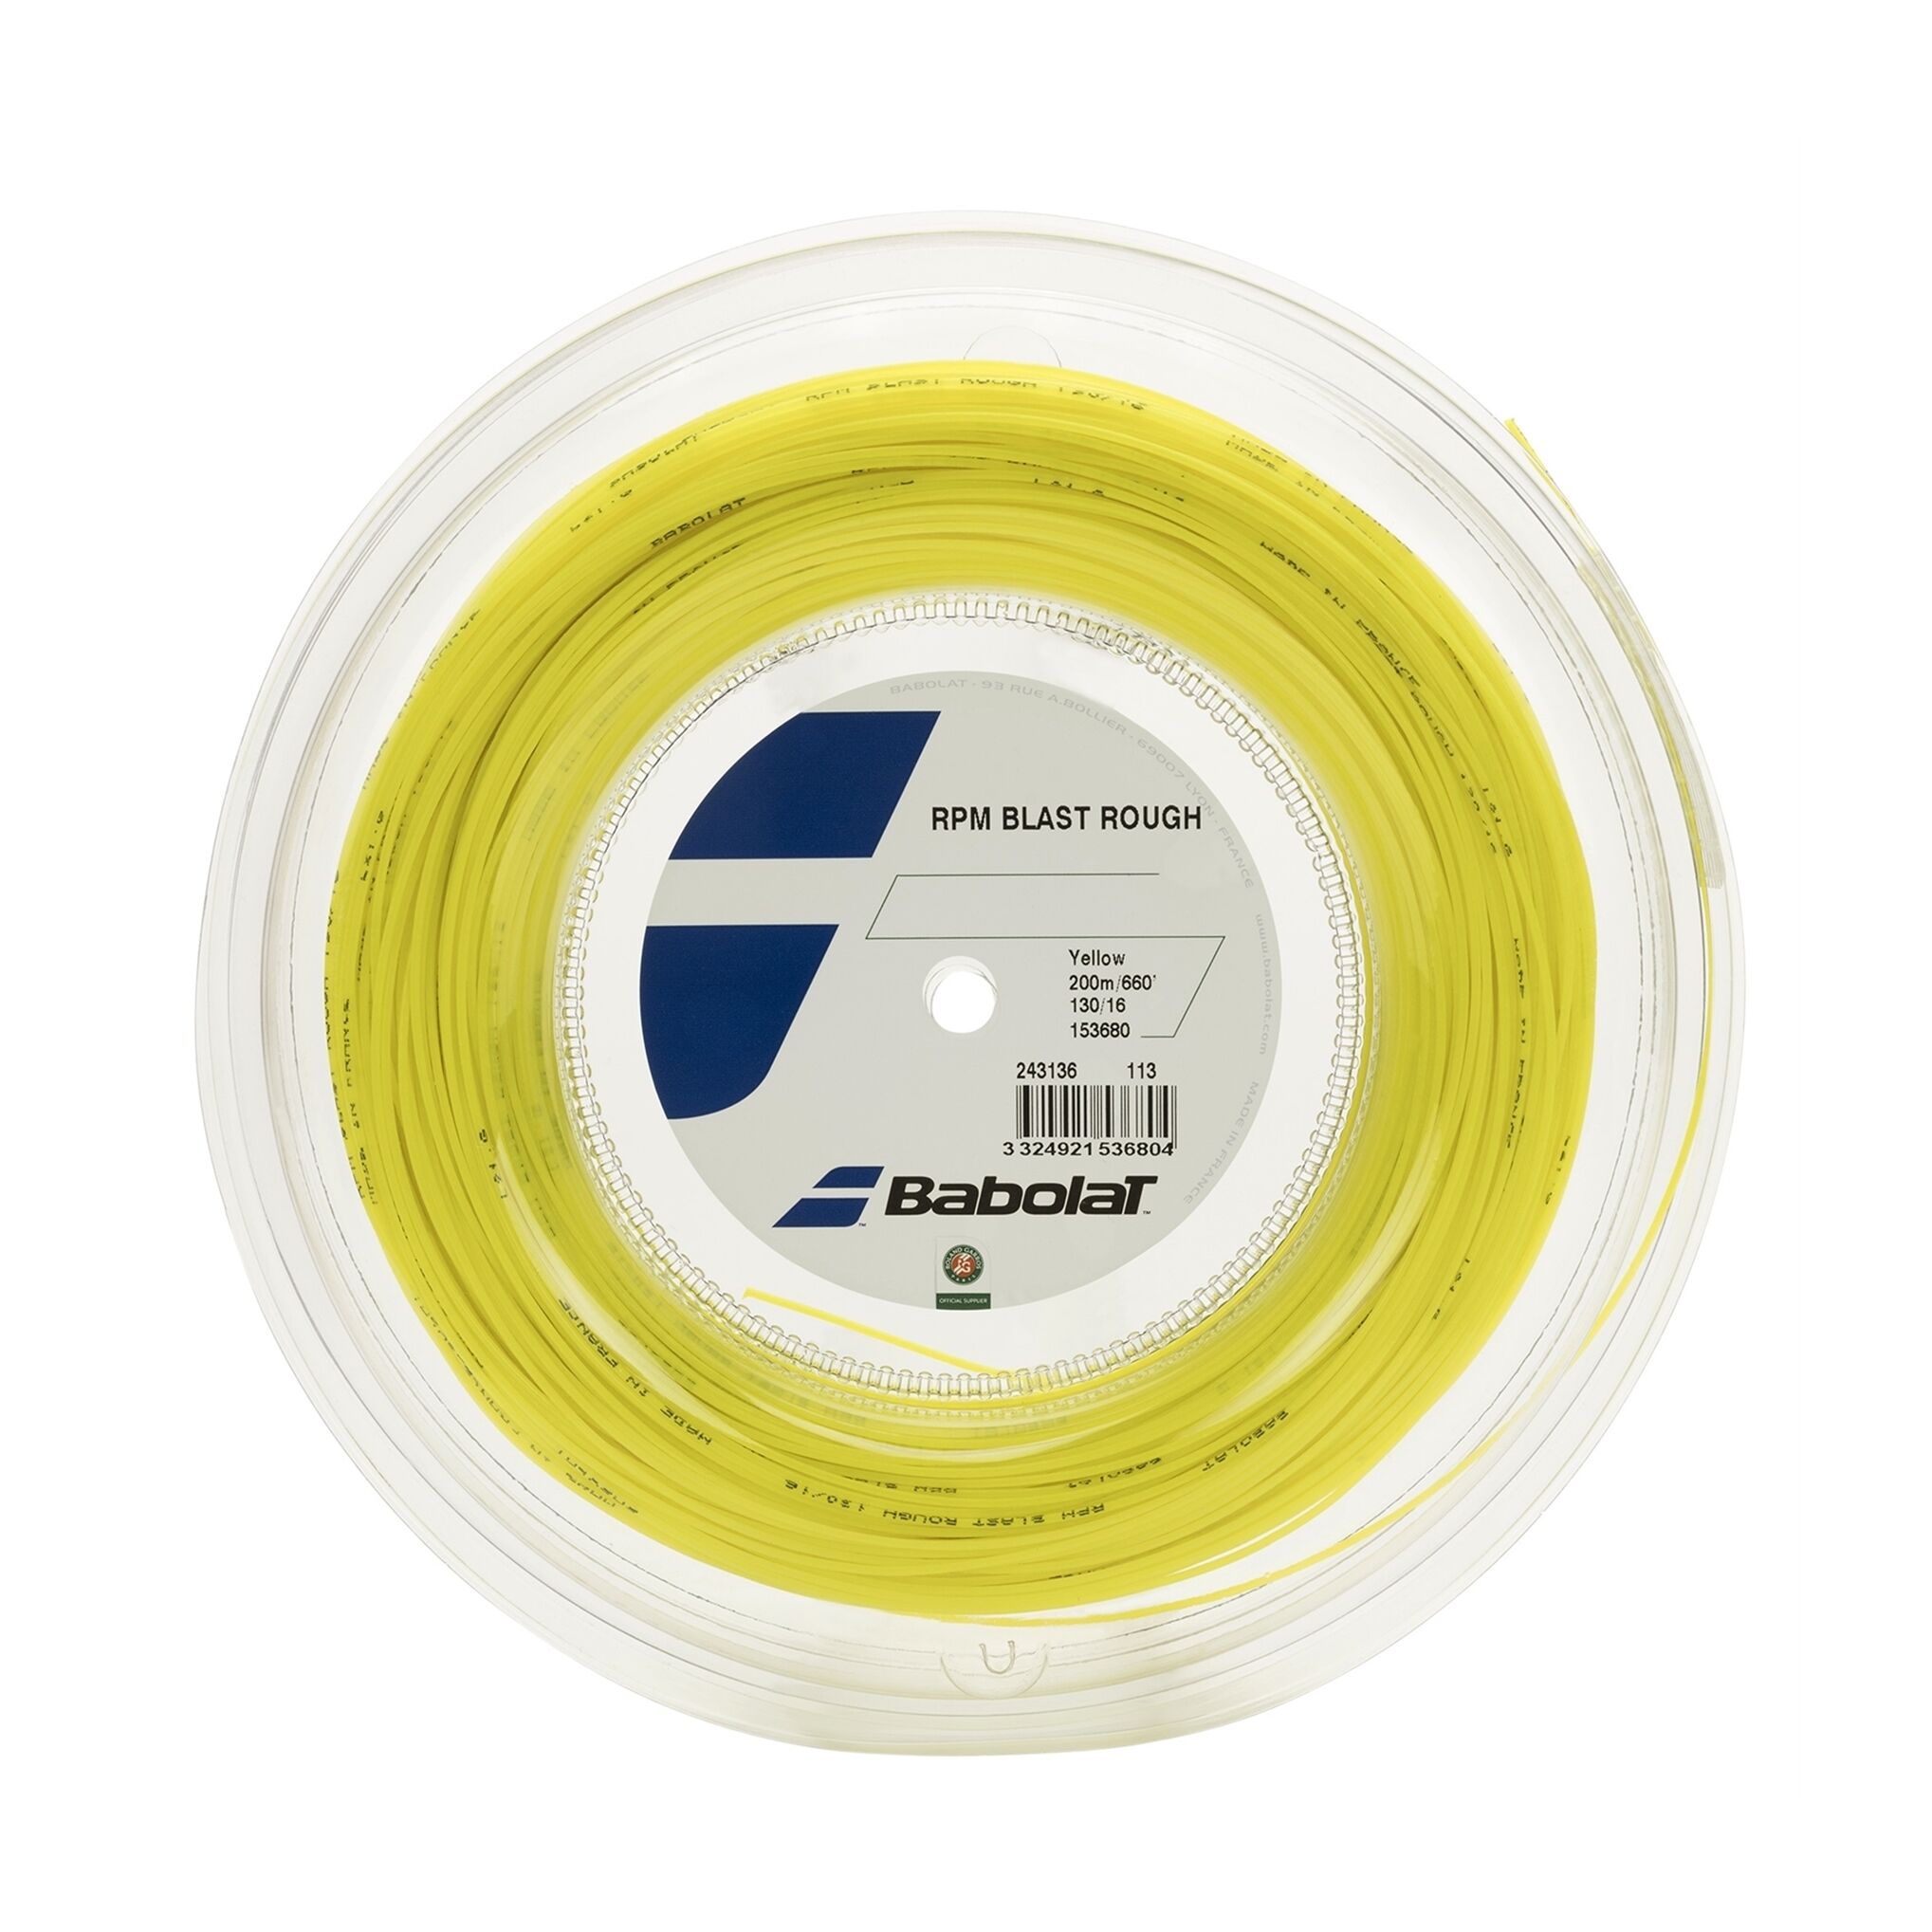 Babolat RPM Blast Rough Yellow 200 m 1.25